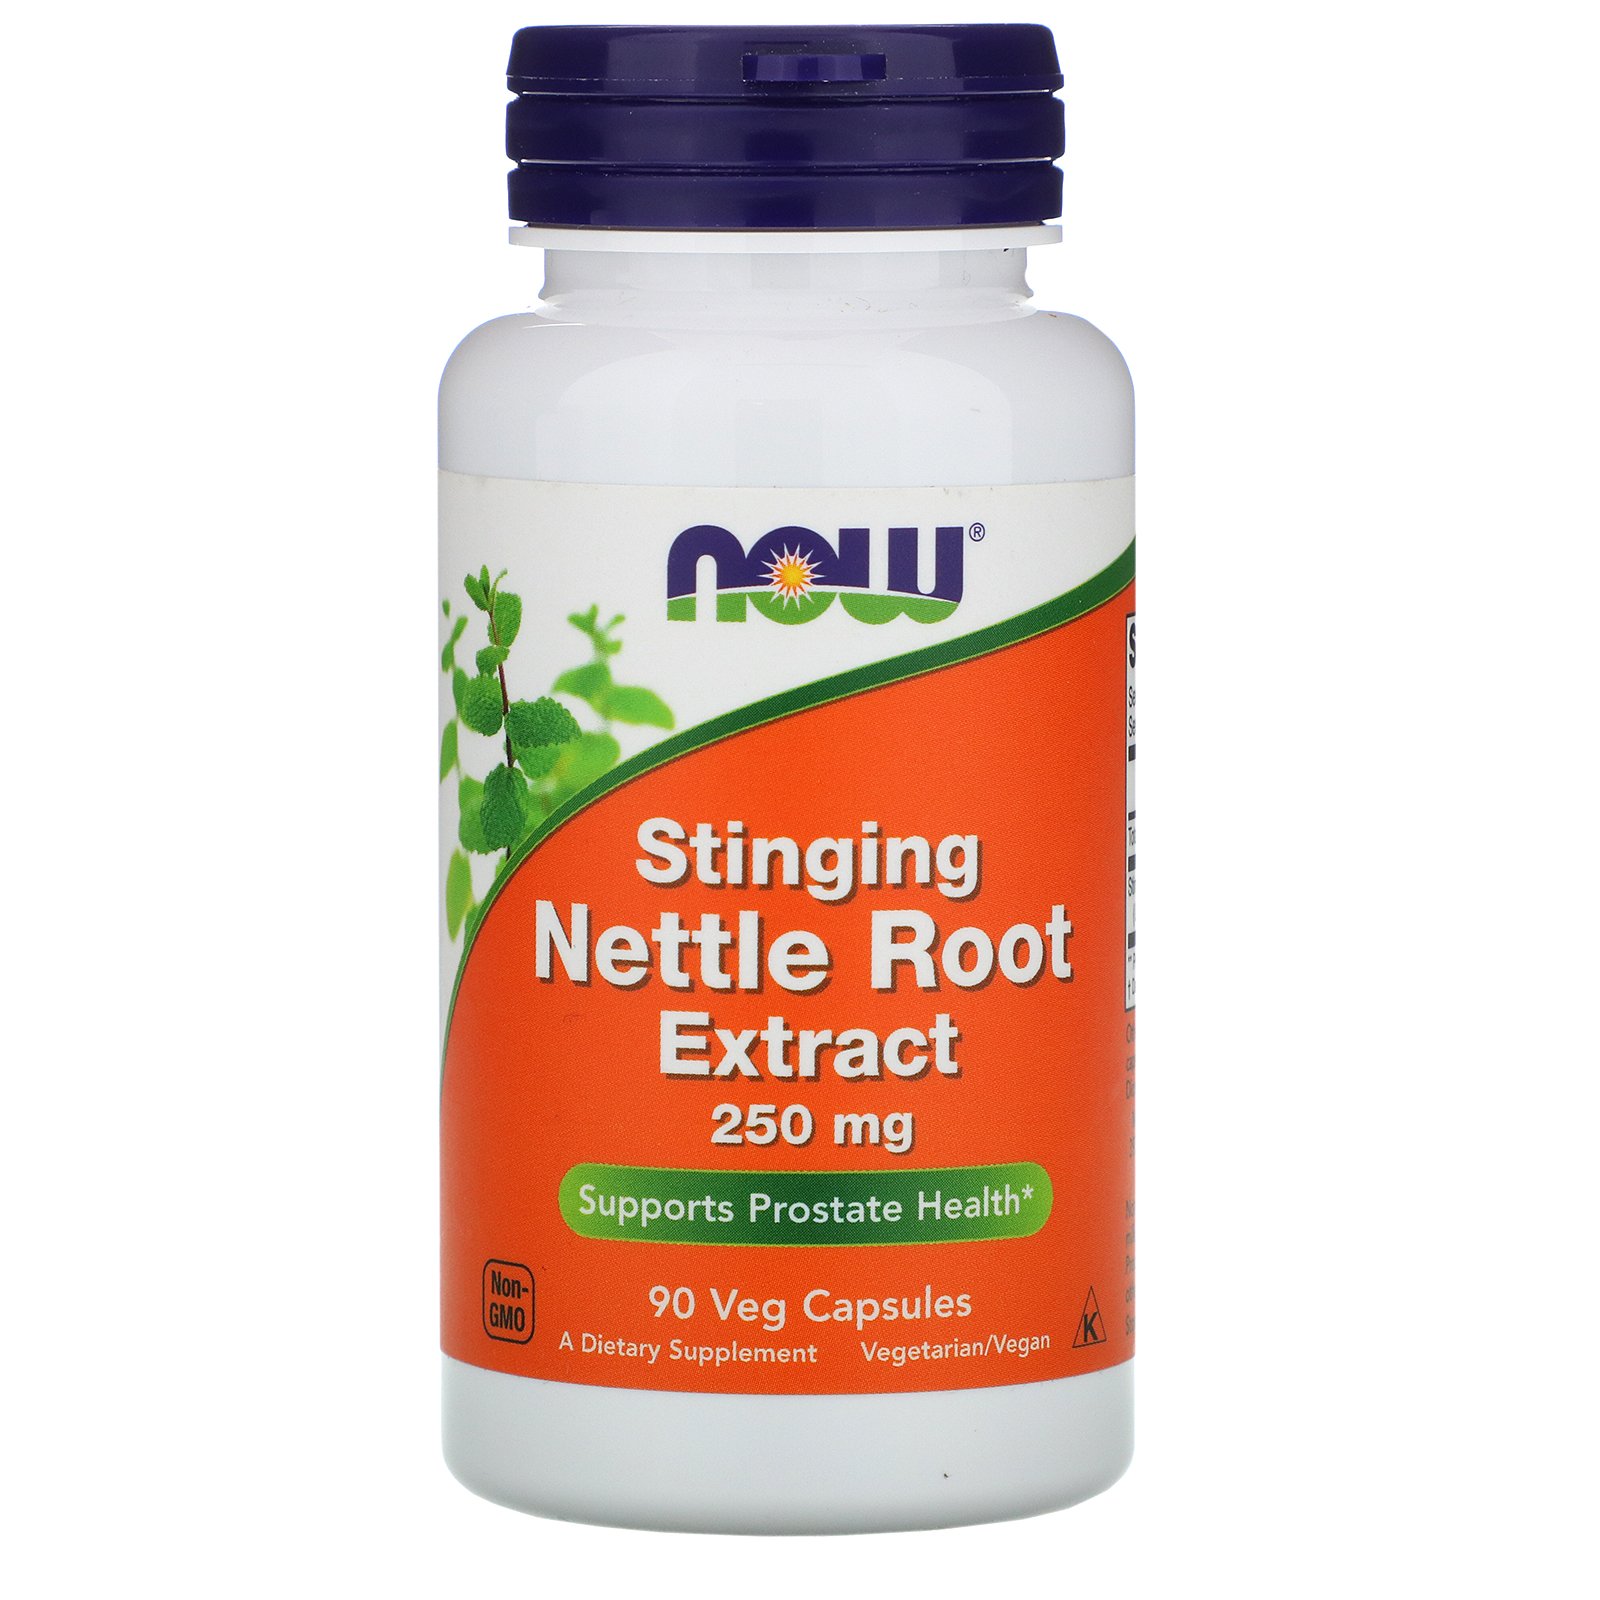 Nettle Root Extract, Крапива Жгучая Экстракт Корня 250 мг - 90 капсул